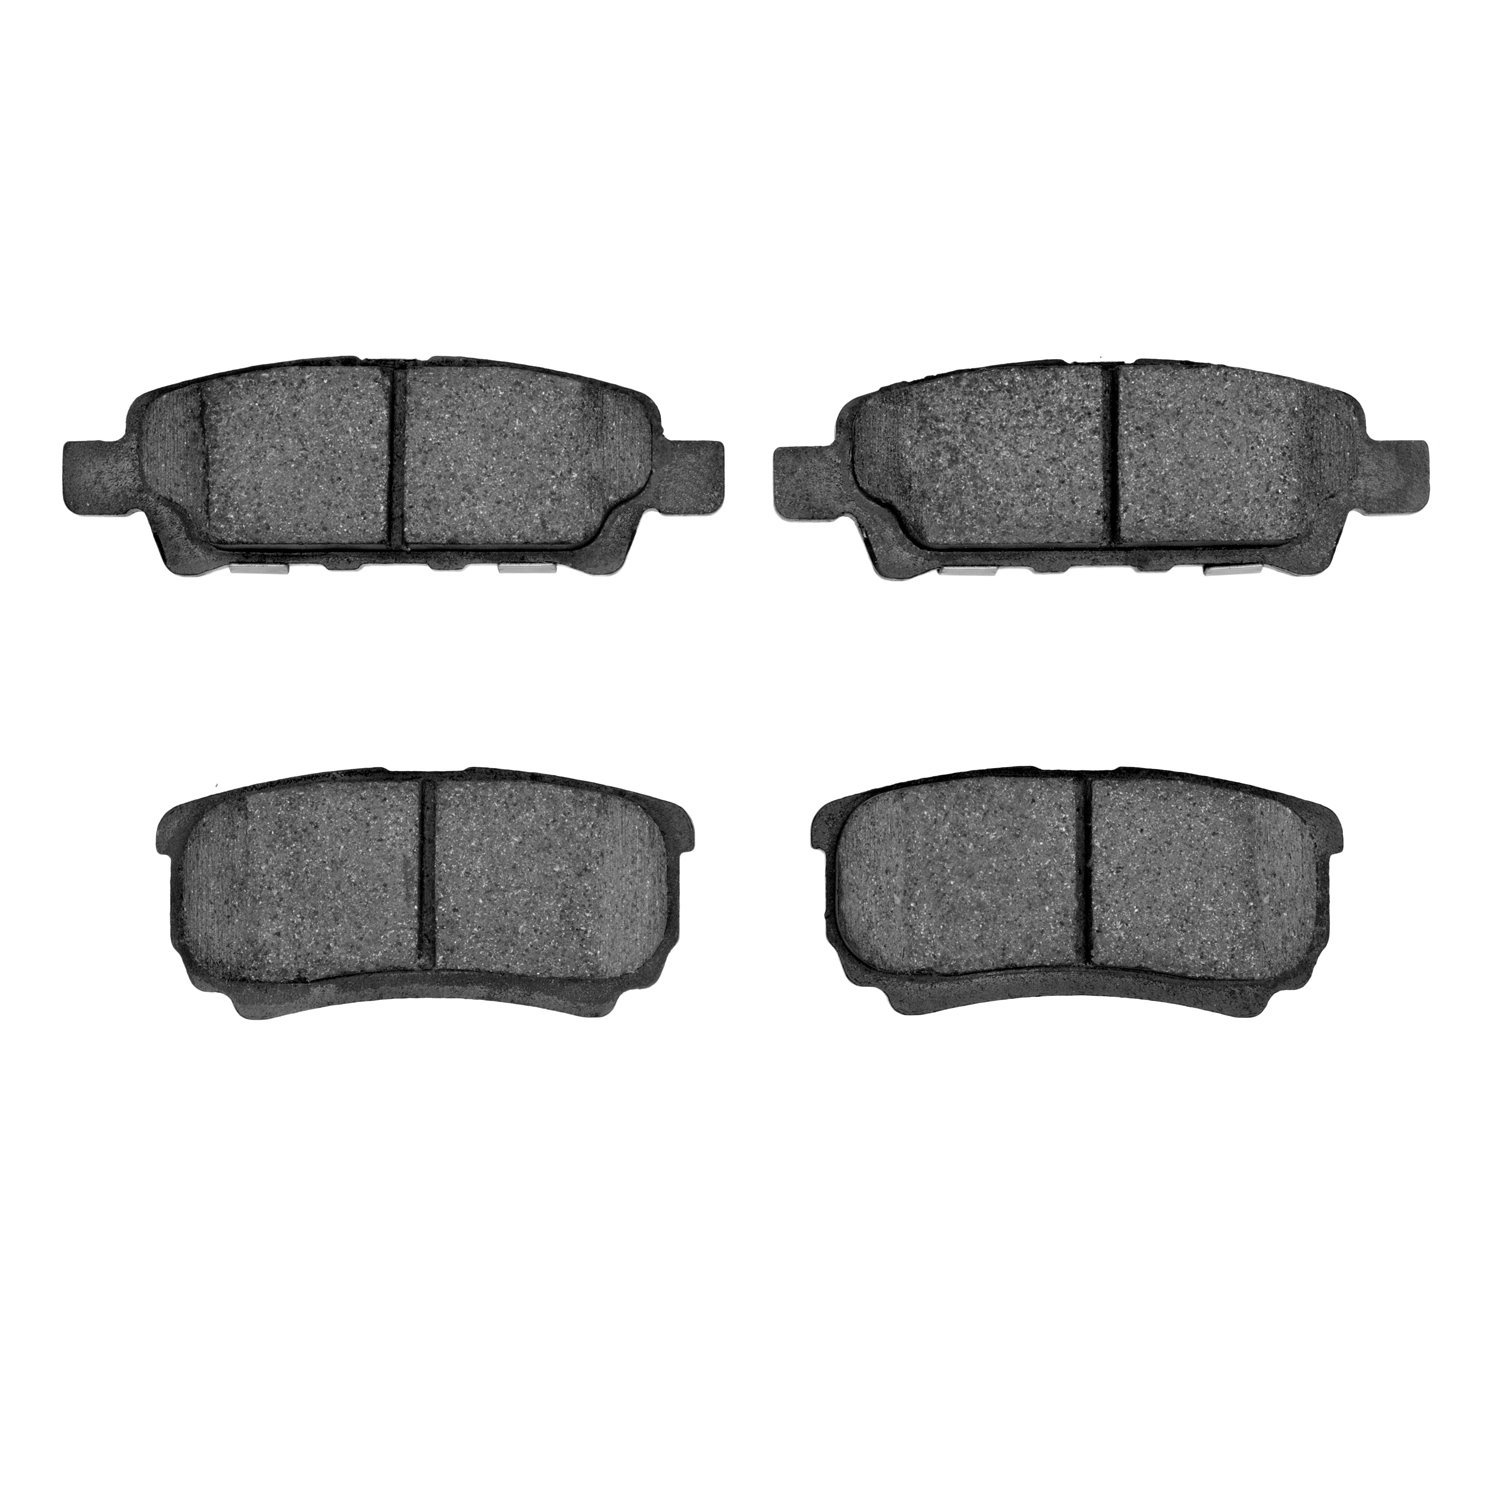 Semi-Metallic Brake Pads, 2004-2017 Fits Multiple Makes/Models, Position: Rear